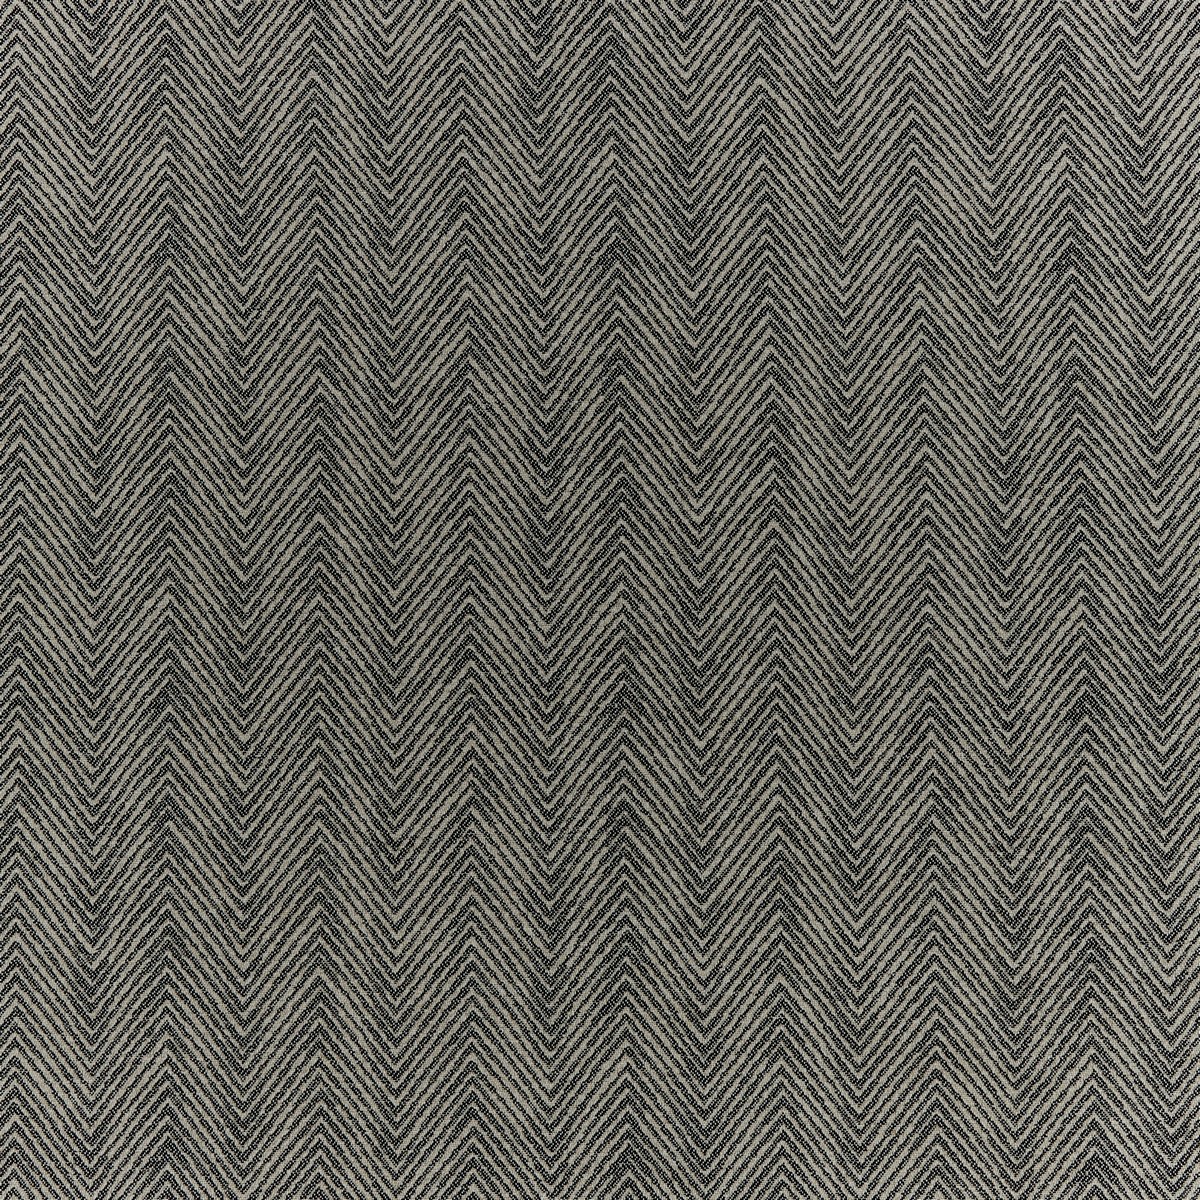 Sula Charcoal Fabric by iLiv